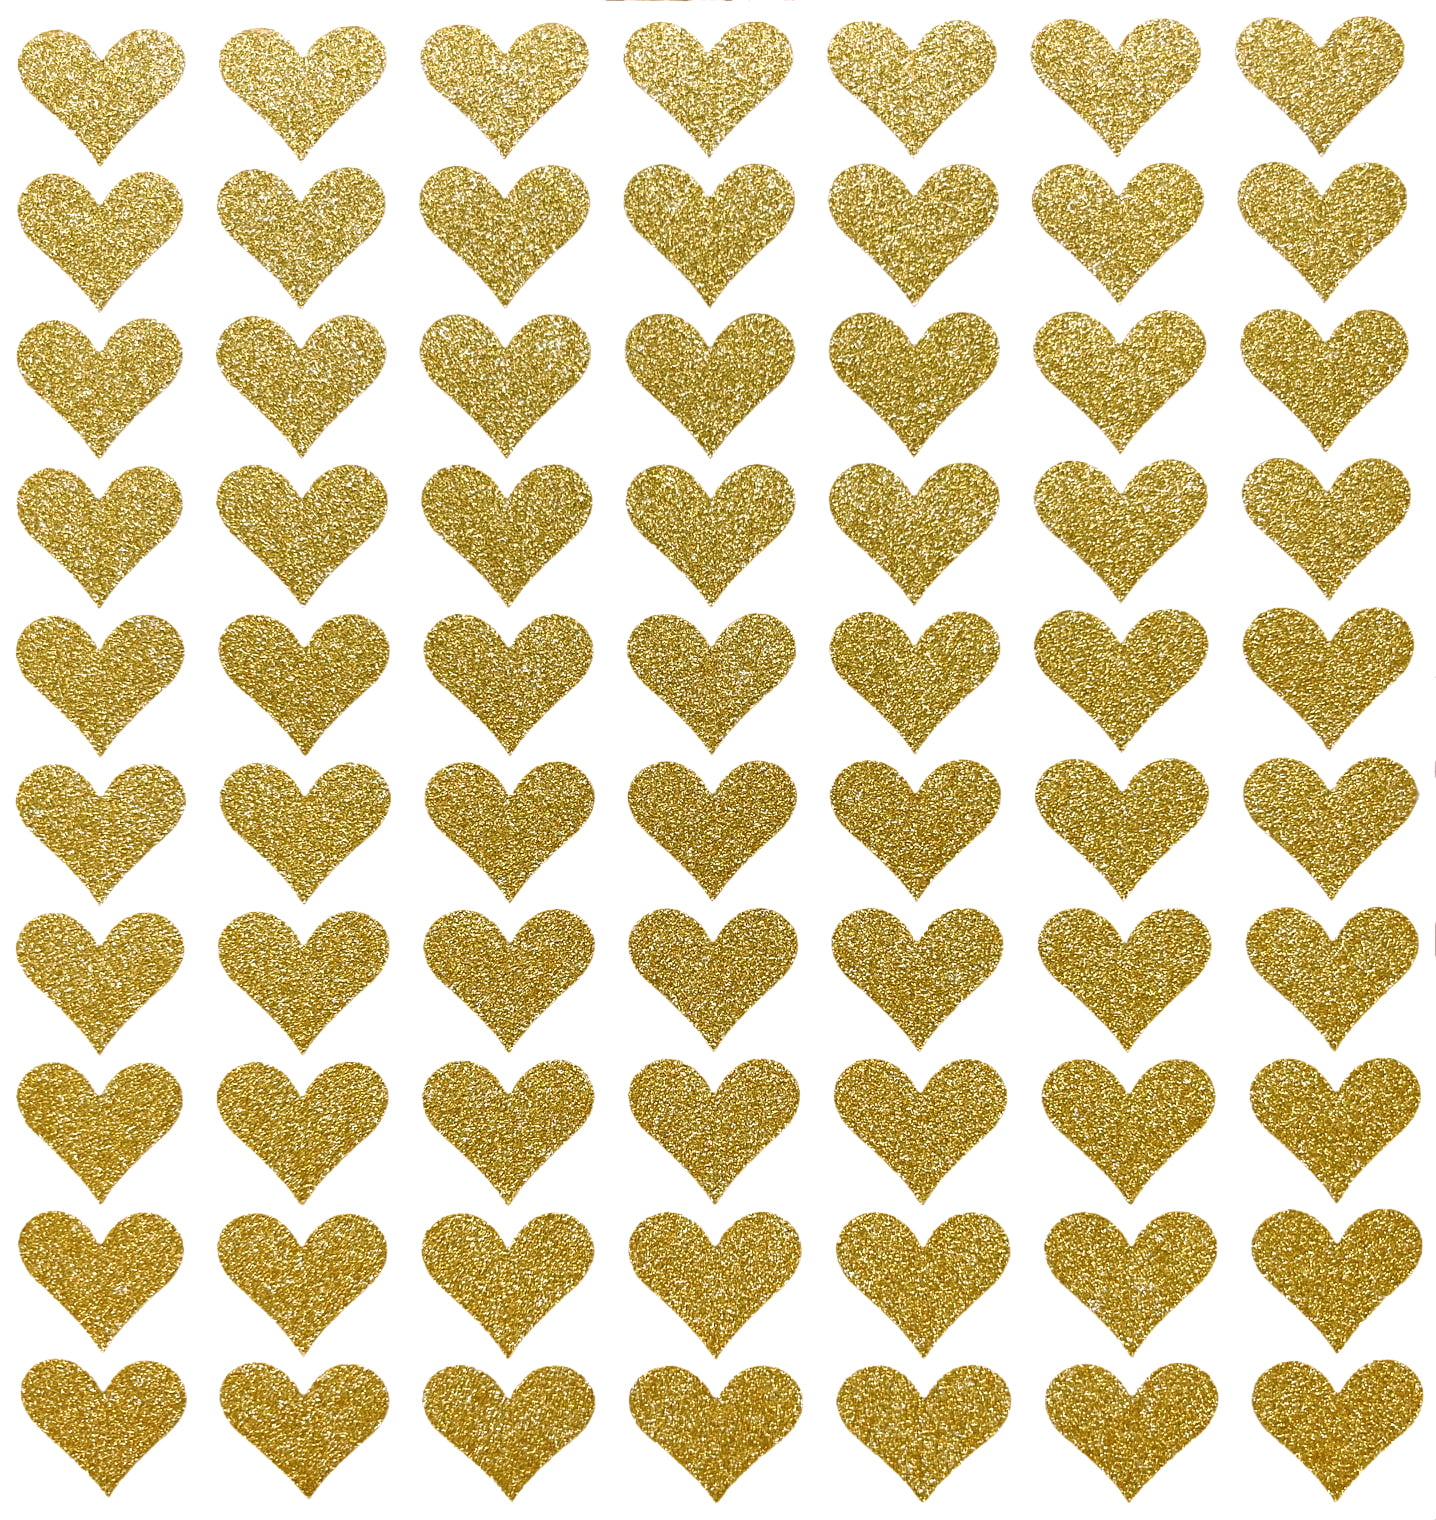 104 x Heart Stickers Party Wedding Celebration Metallic Or Glitter 